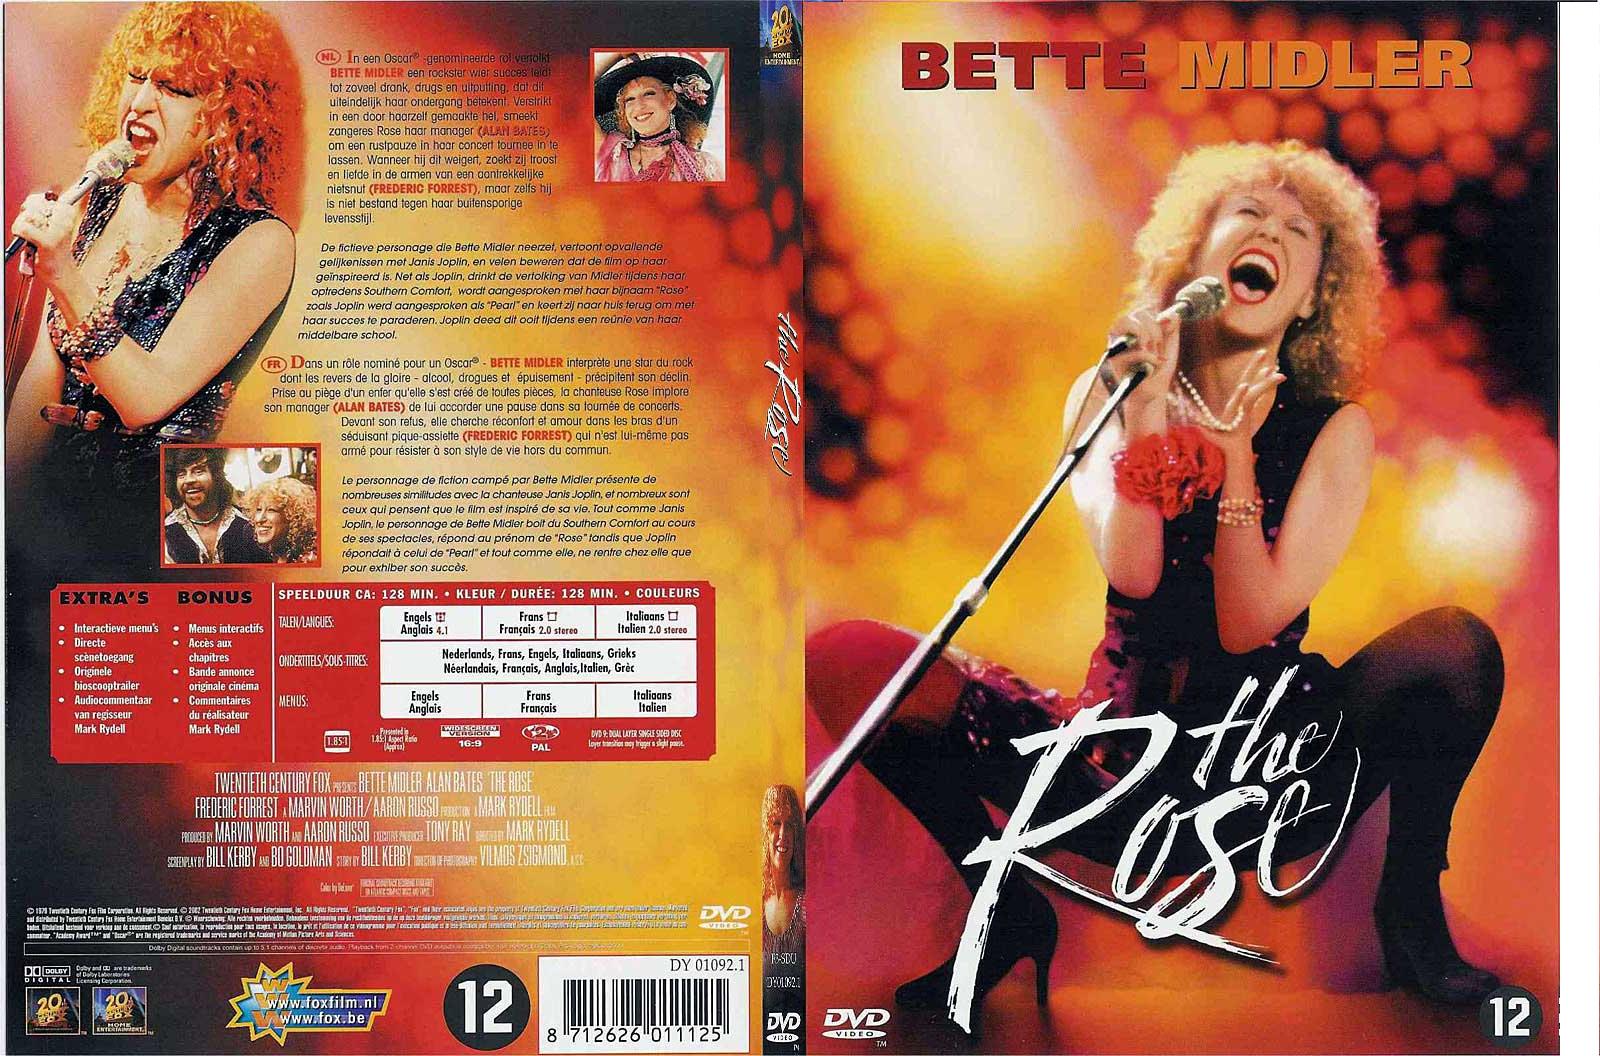 Jaquette DVD The rose - SLIM